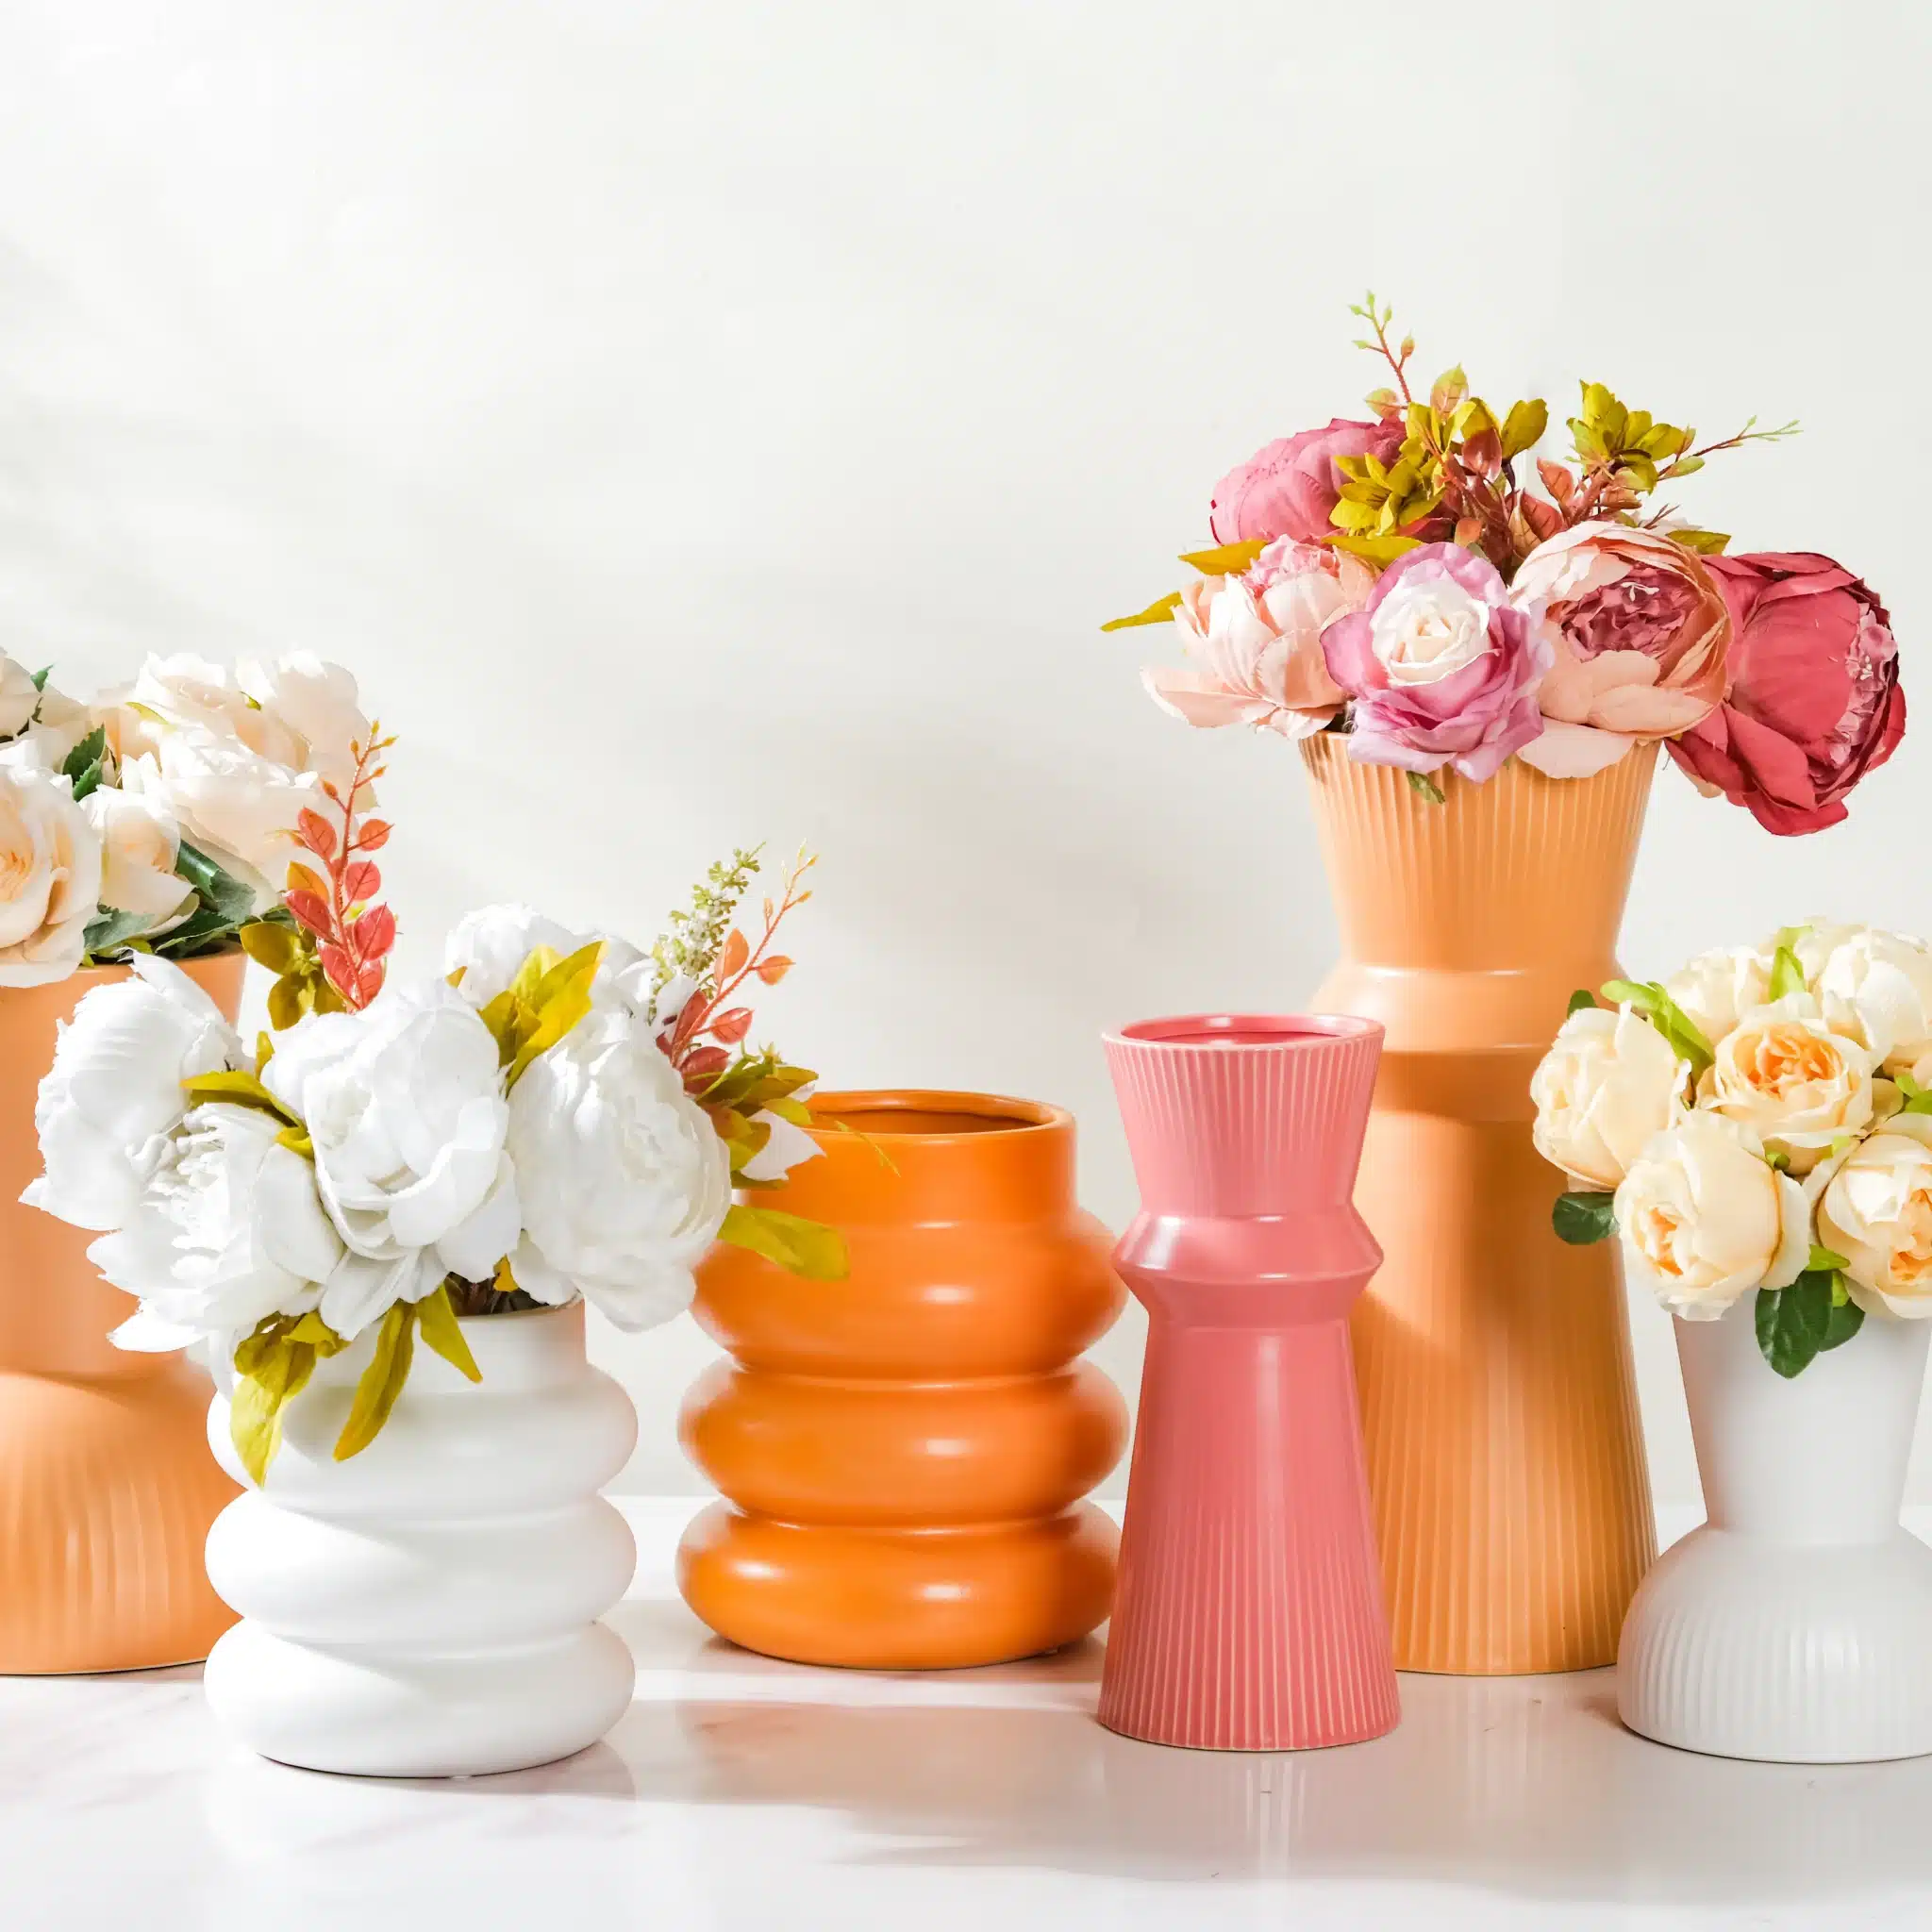 Utilize Vases as Individual Decorative Elements